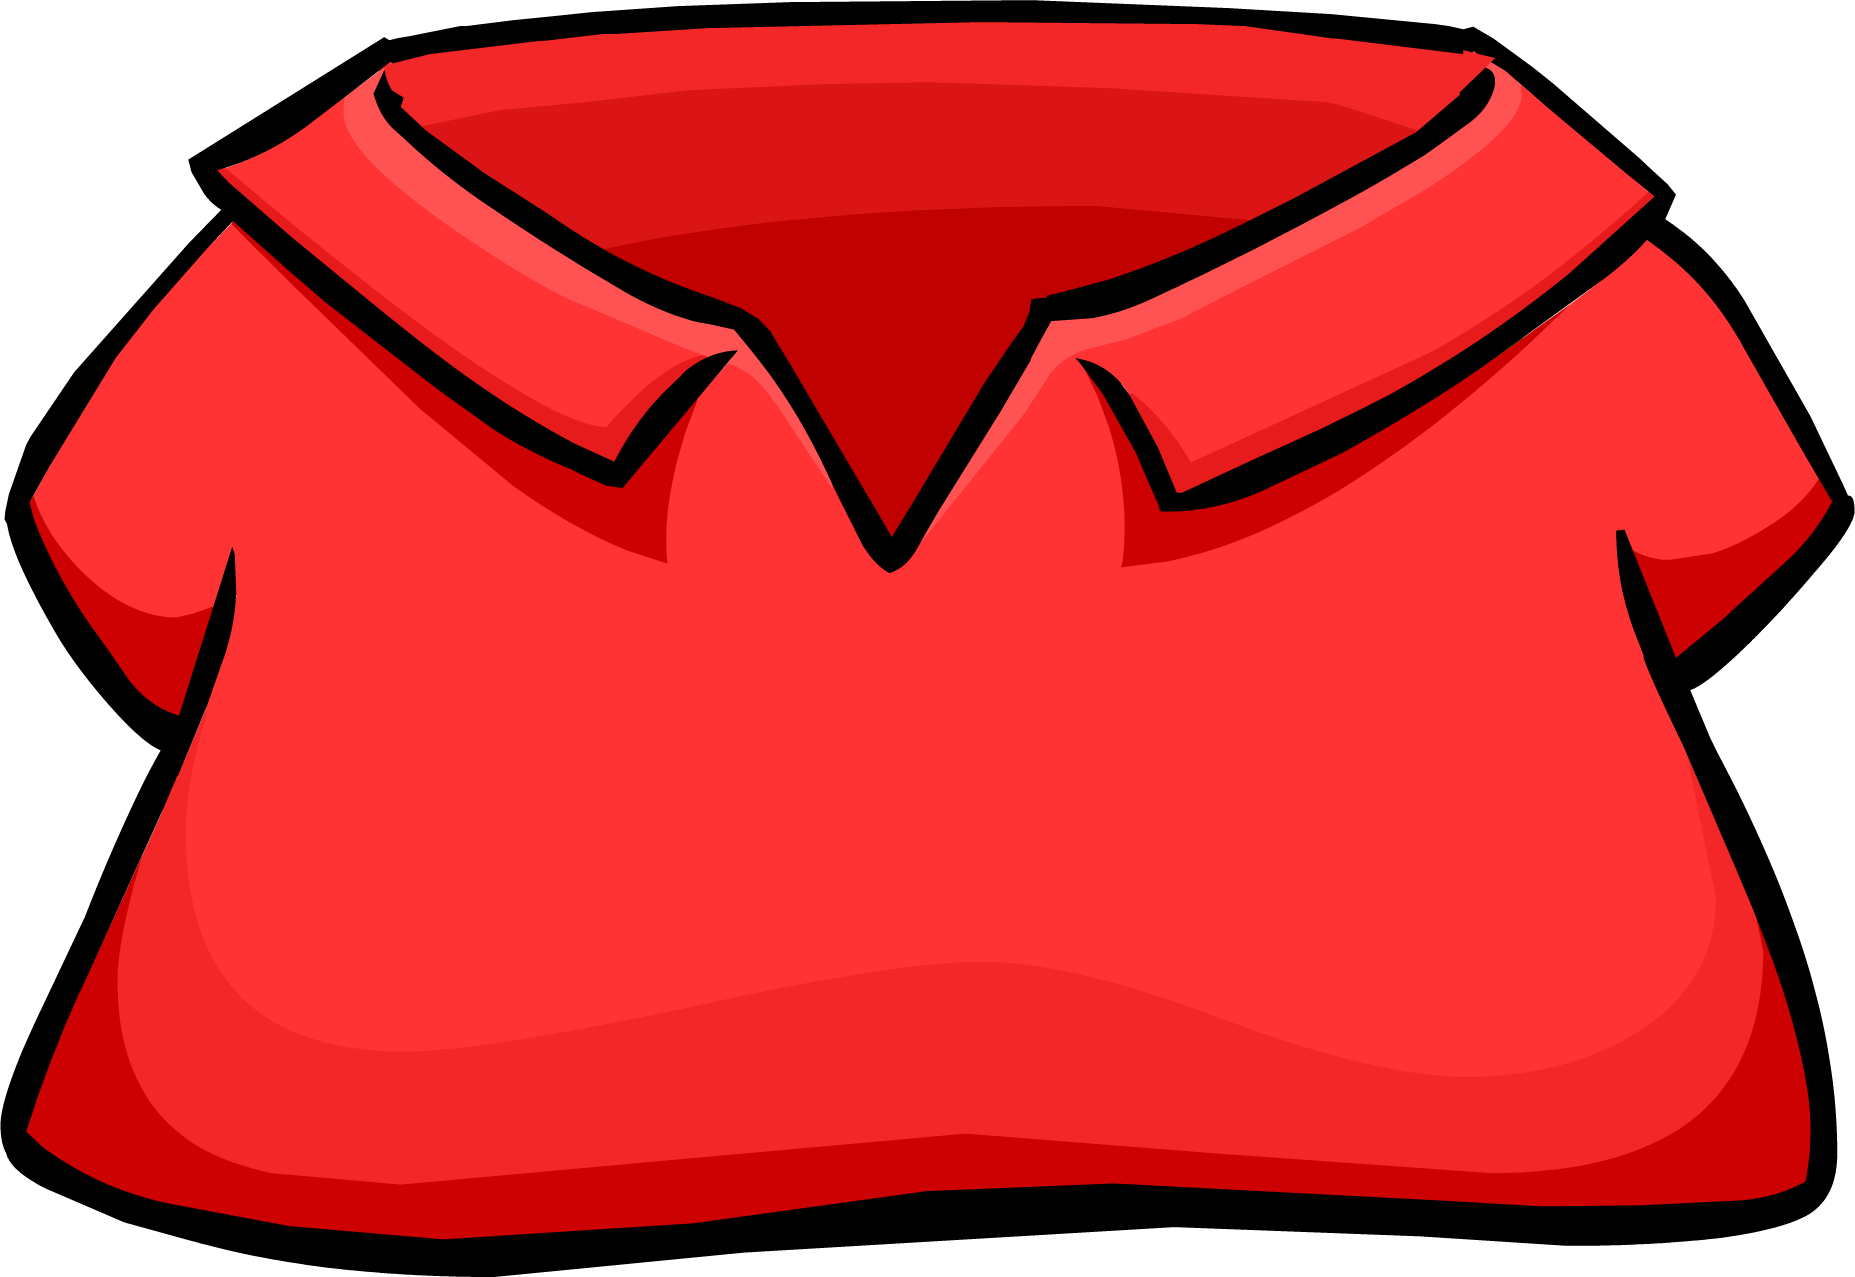 Shirt clipart red shirt. Club penguin wiki fandom